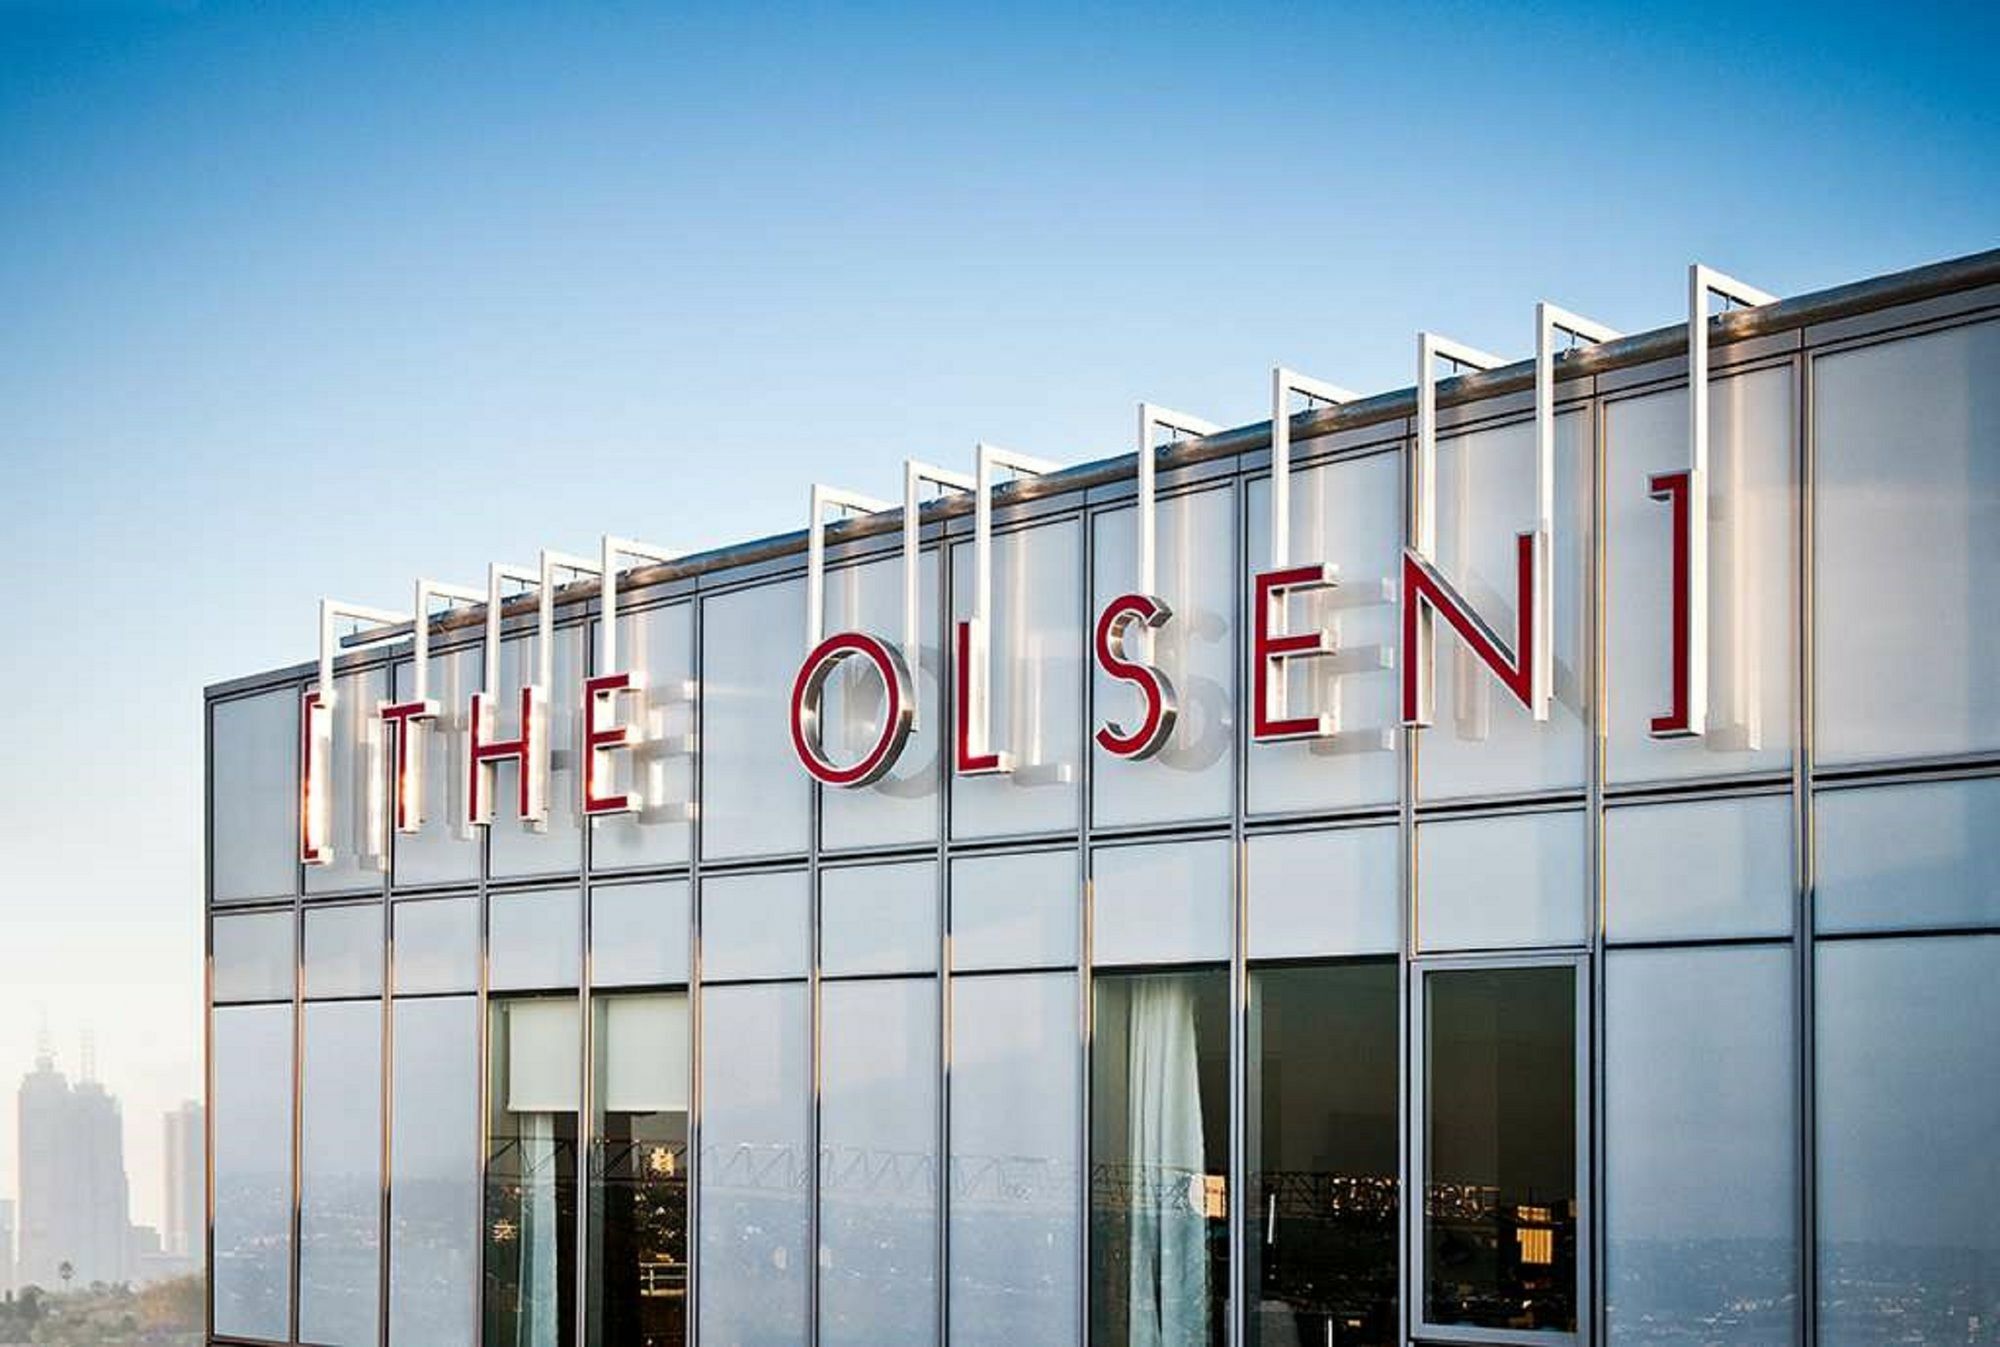 The Olsen Melbourne Art Series Exterior photo